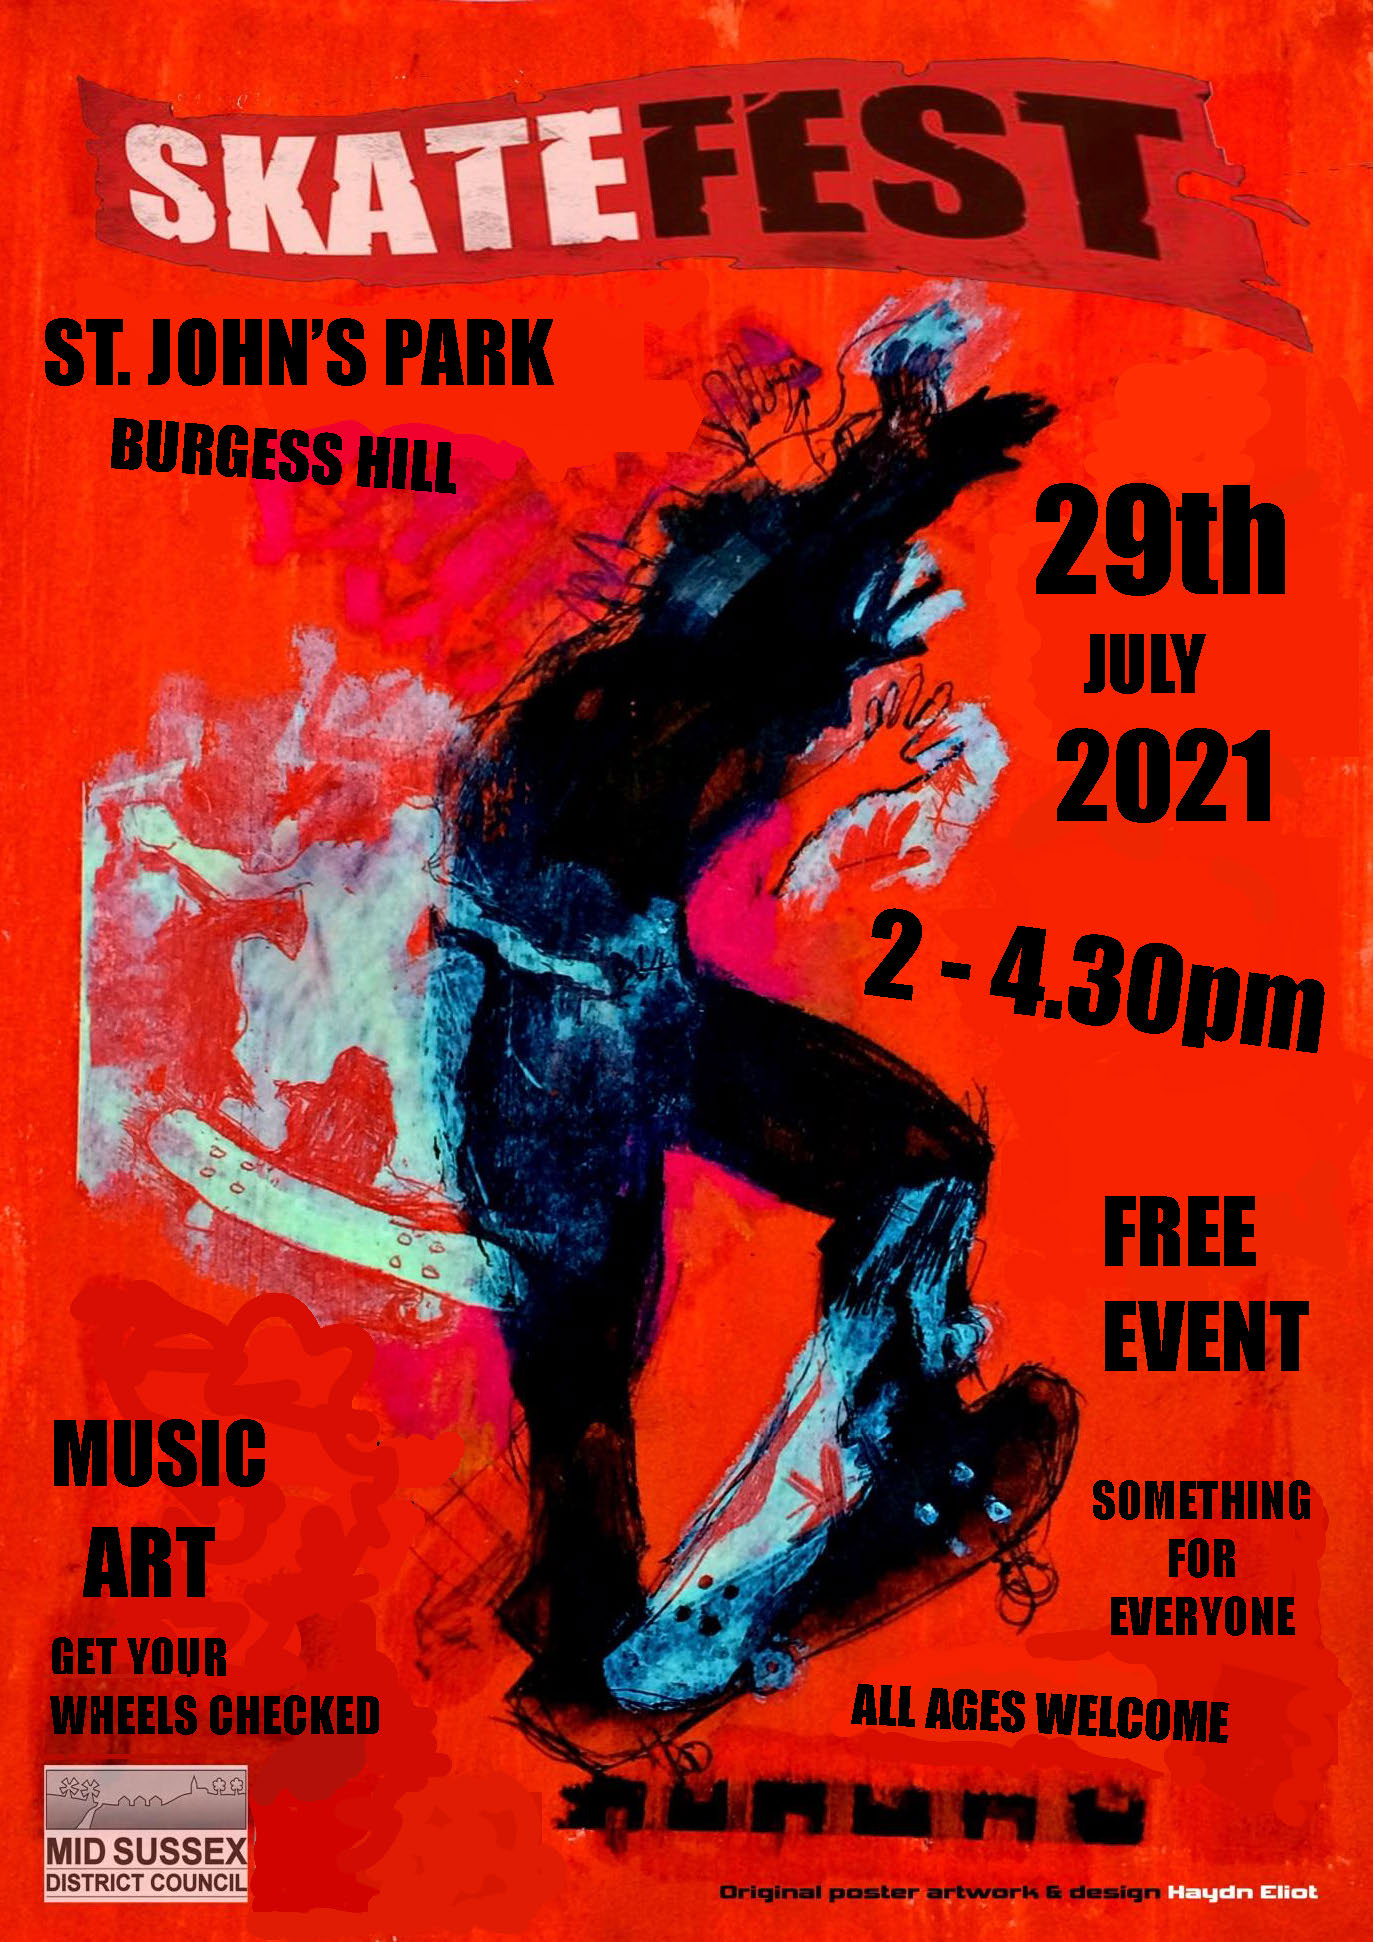 Skate Fest poster 2021 BH Burgess Hill Town Council